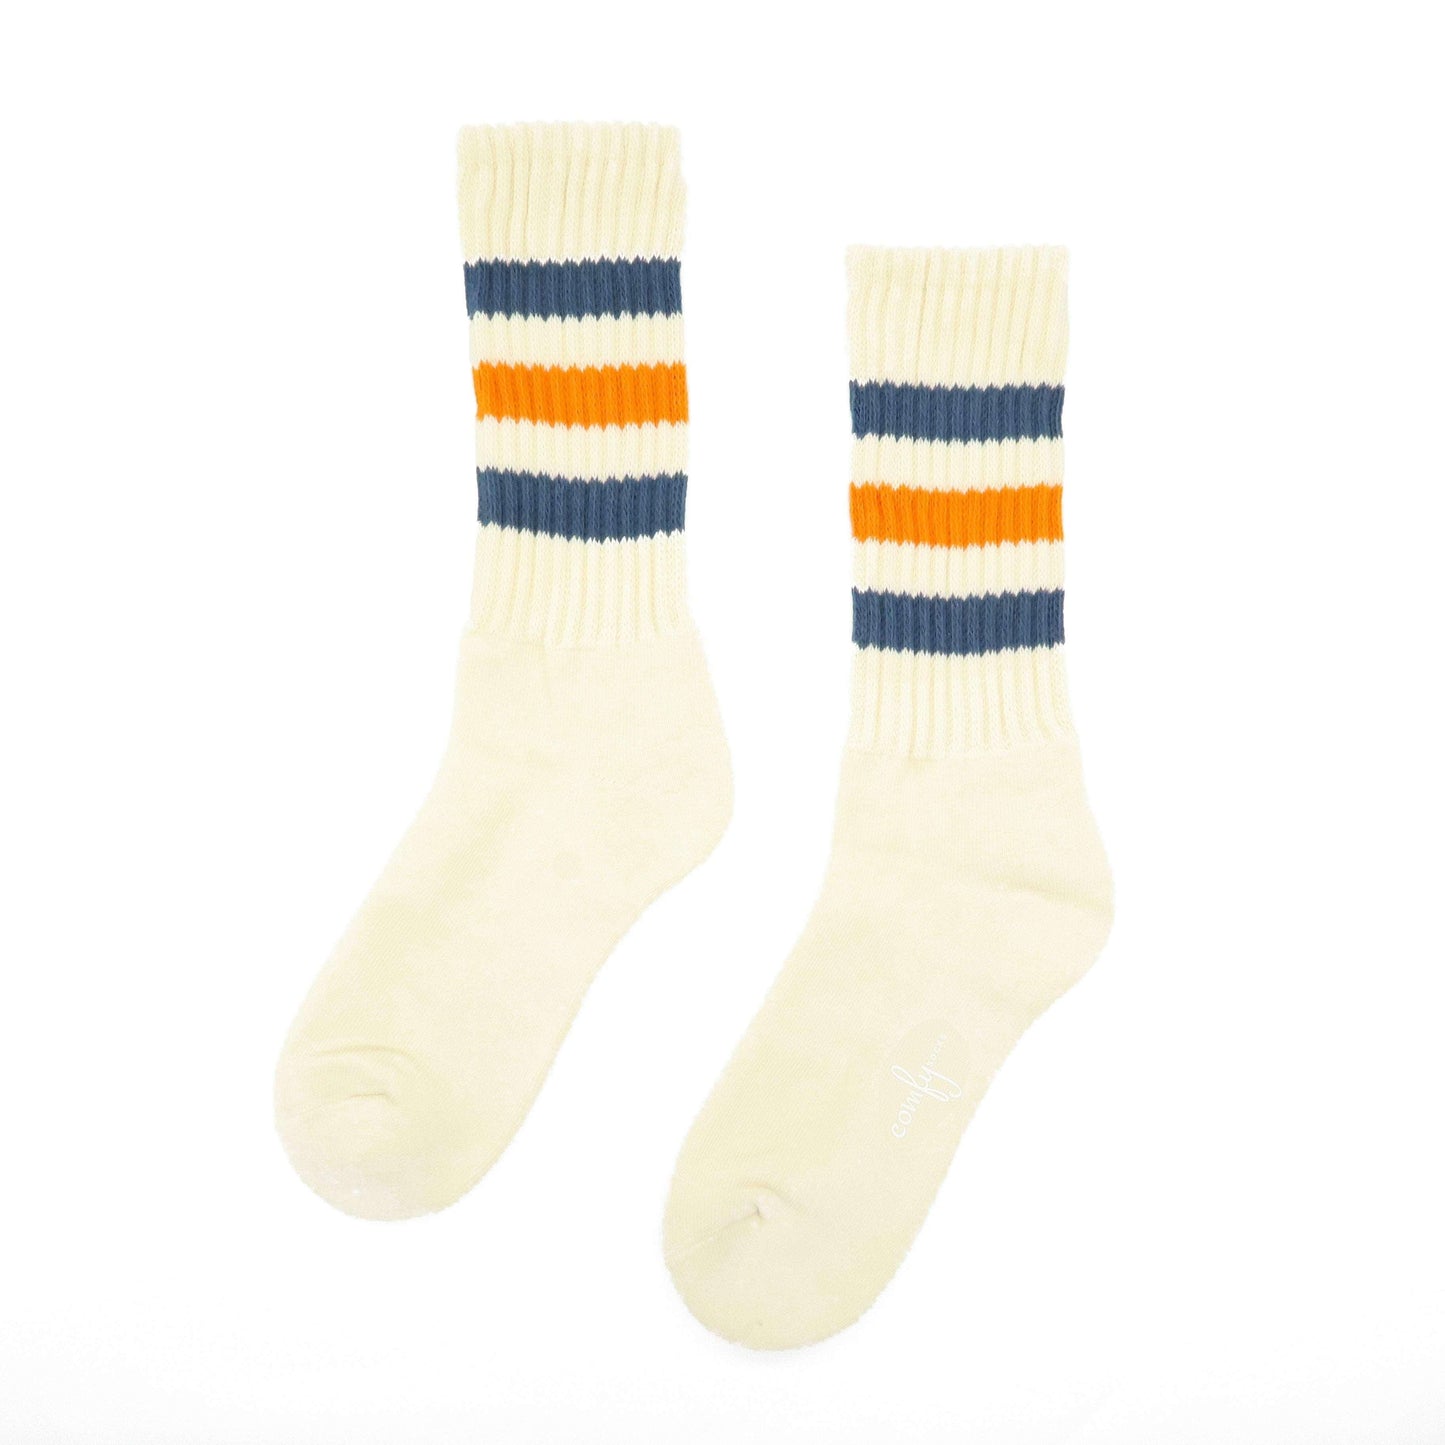 Old school sporty striped white socks - Blue